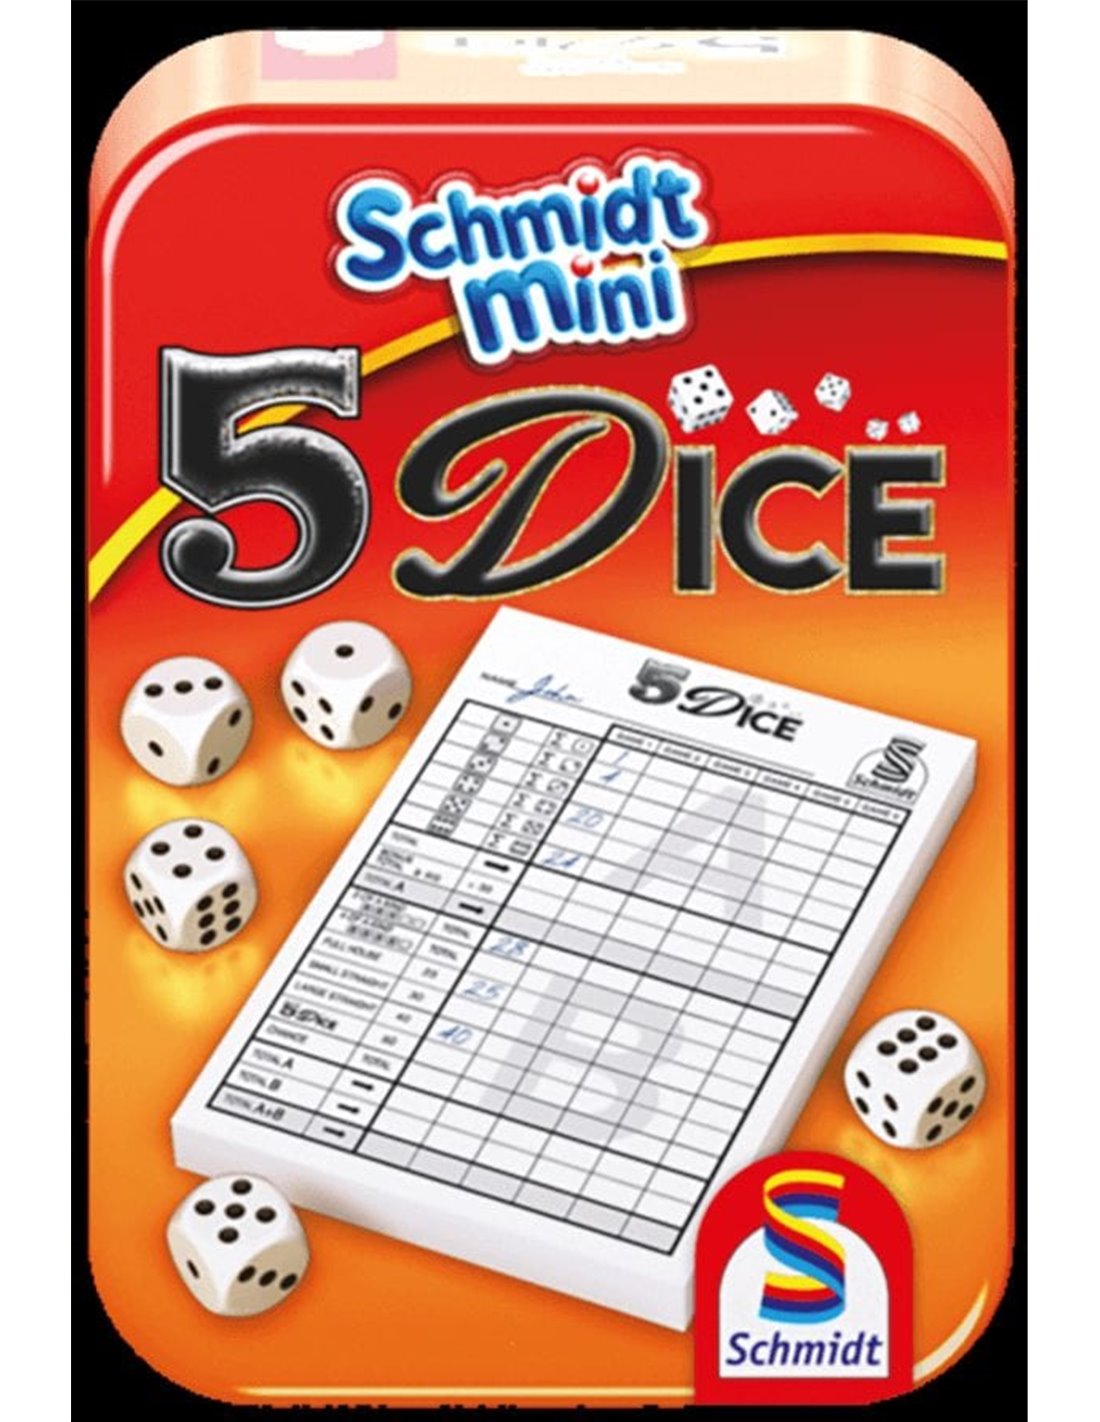 schmidt-mini-5-dice-yahtzee